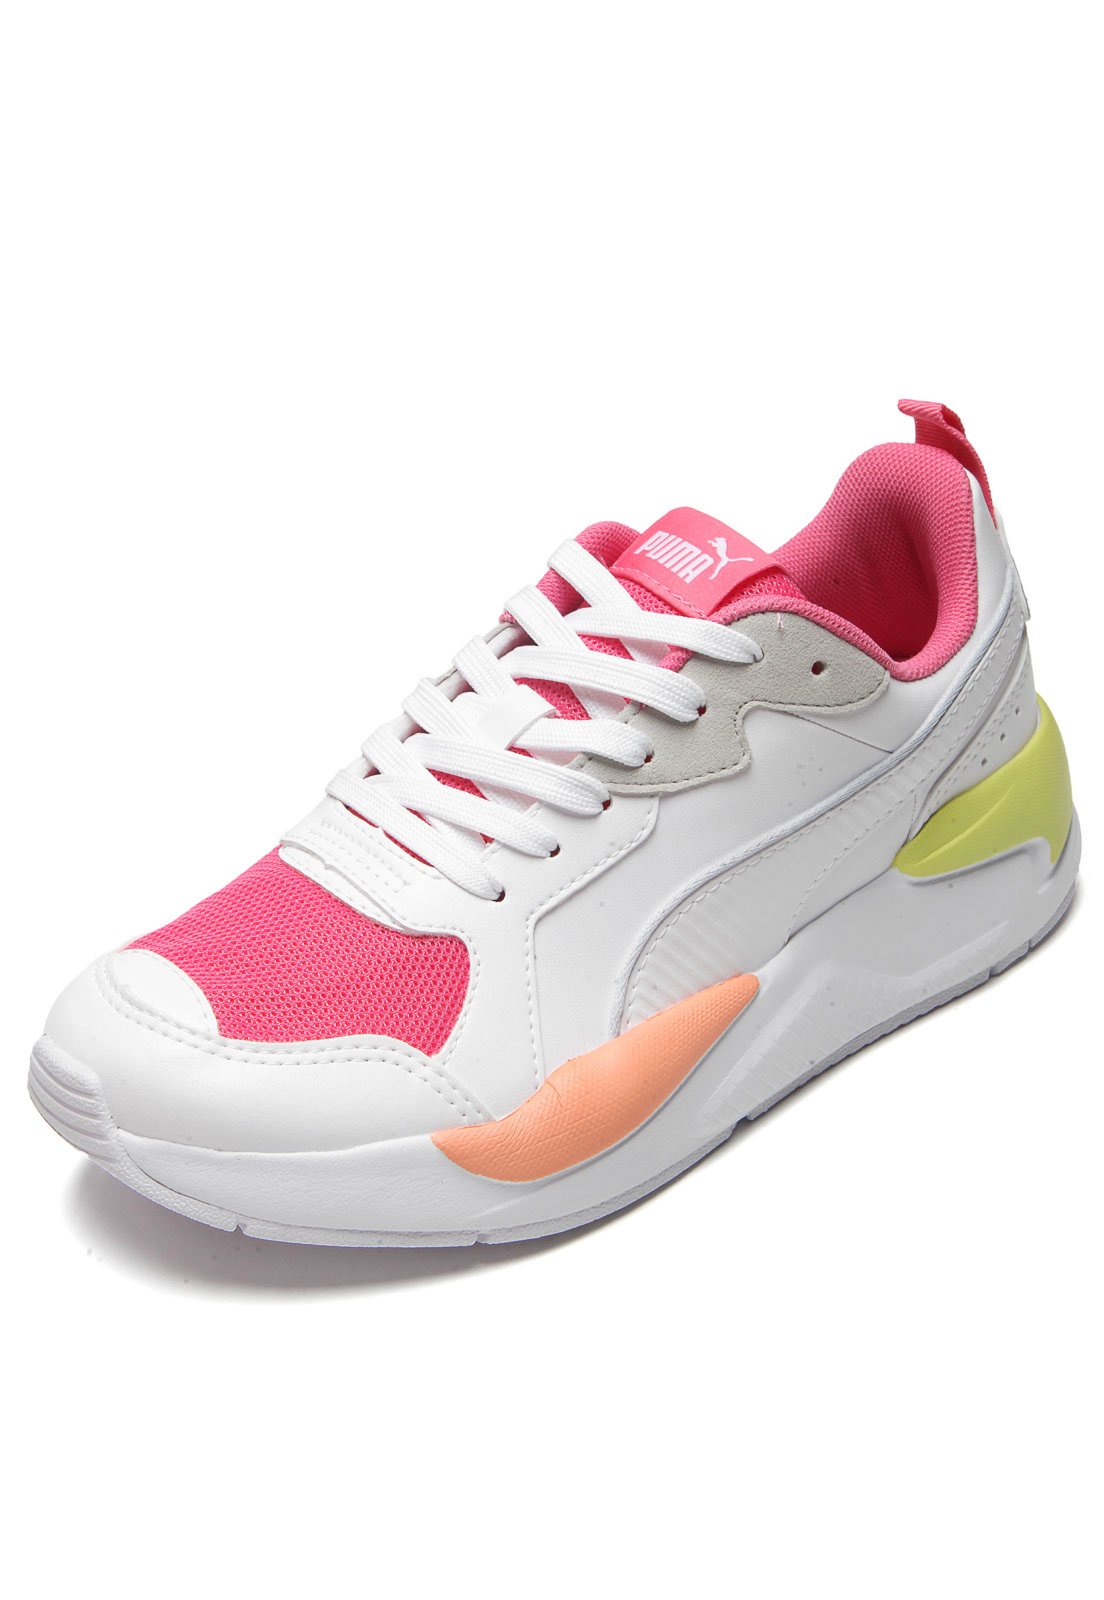 tenis puma rosa e branco